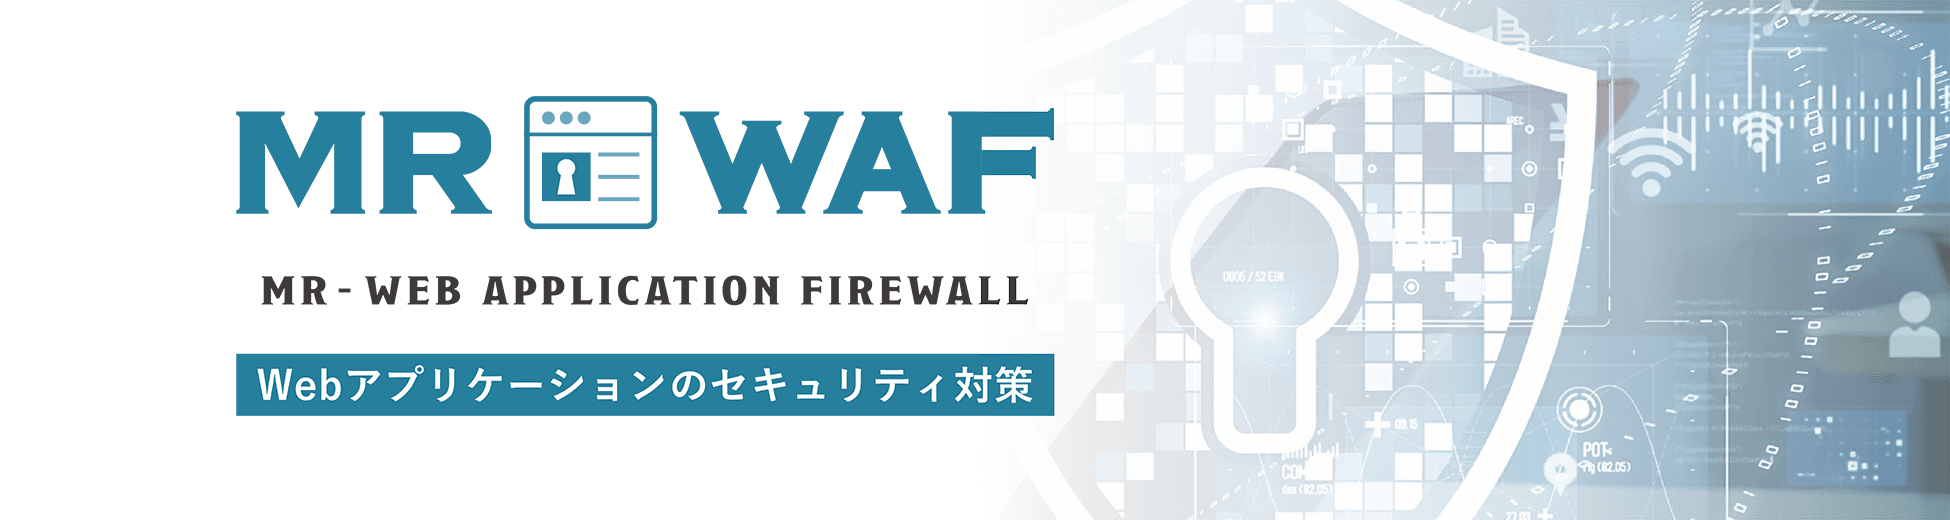 MR-WAF MR-WEB APPLICATION FIREWALL Webアプリケーションのセキュリティ対策